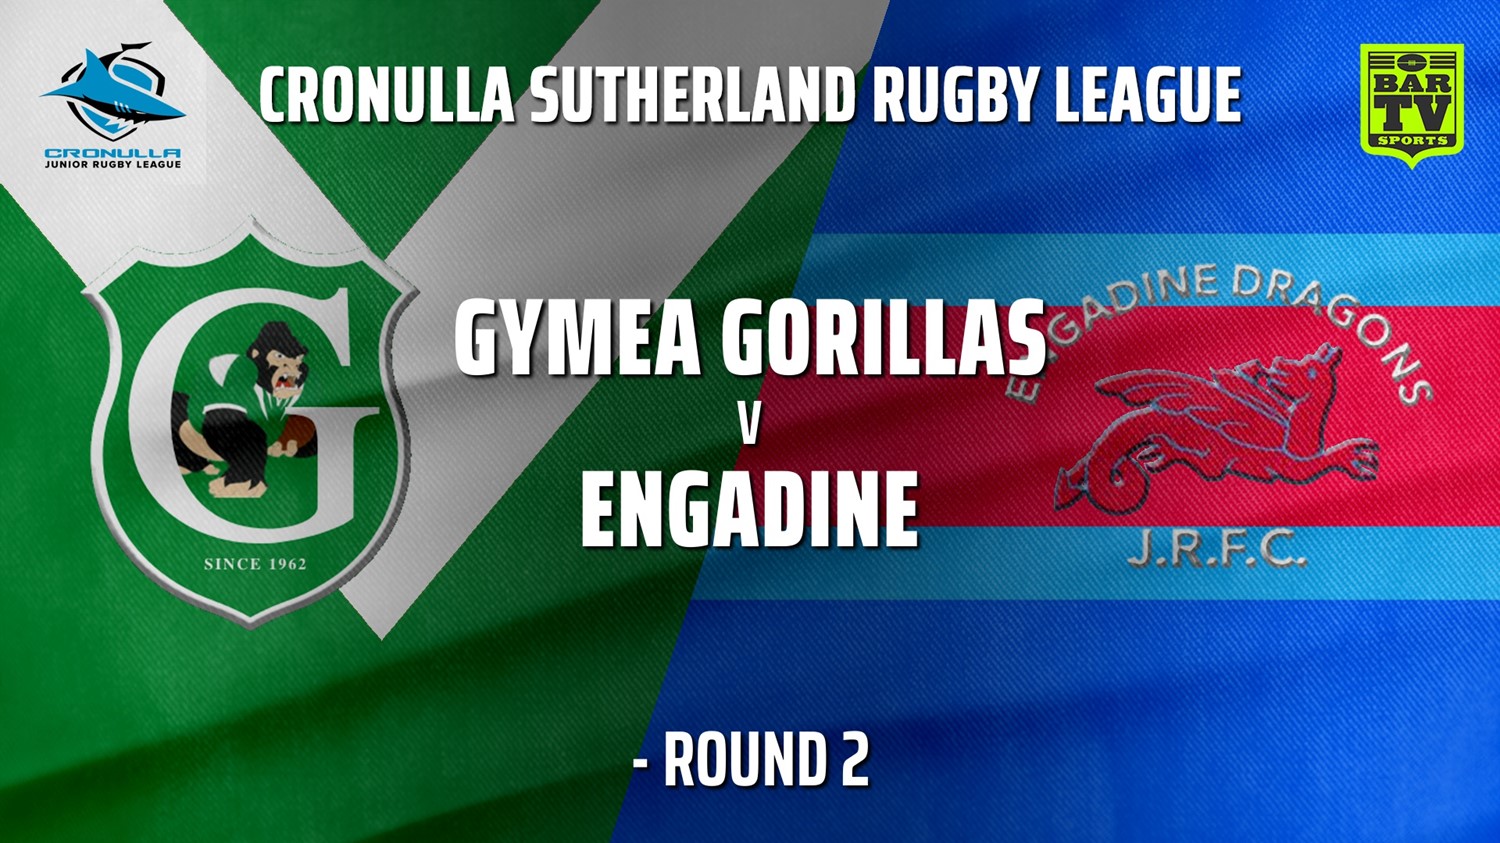 210508-Cronulla JRL Under 11s GOLD Round 2 - Gymea Gorillas v Engadine Dragons Minigame Slate Image